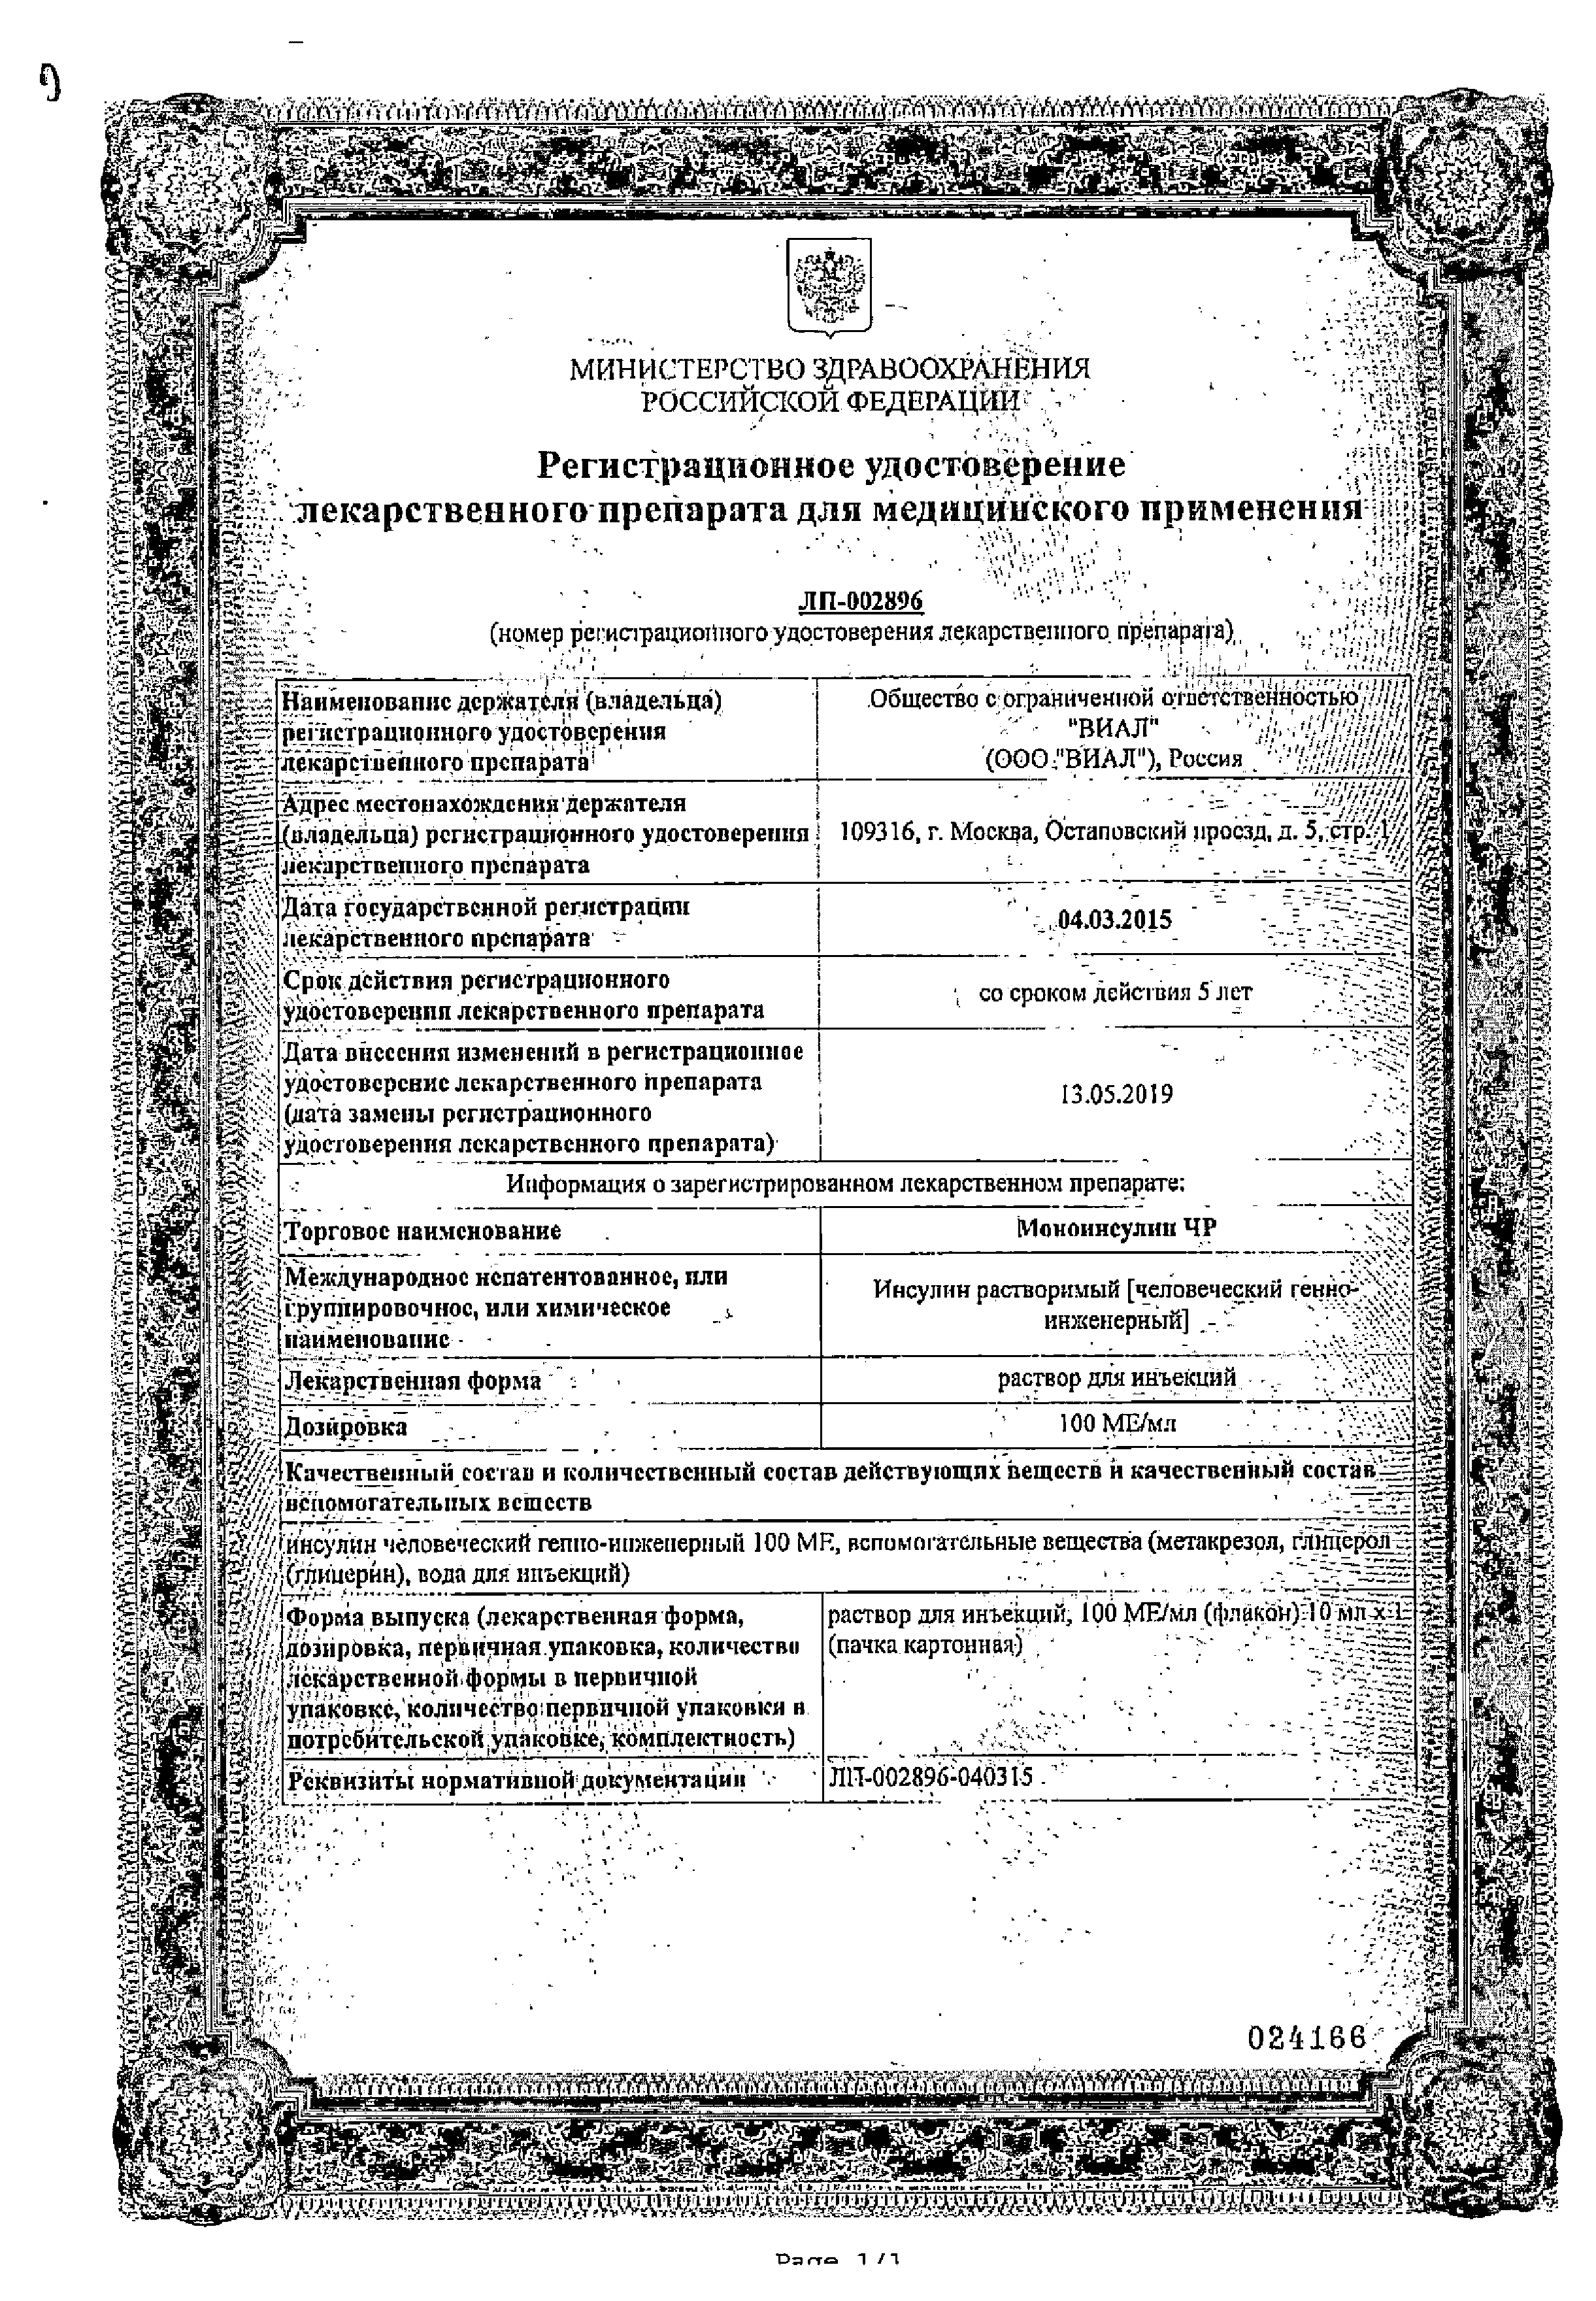 Моноинсулин ЧР сертификат